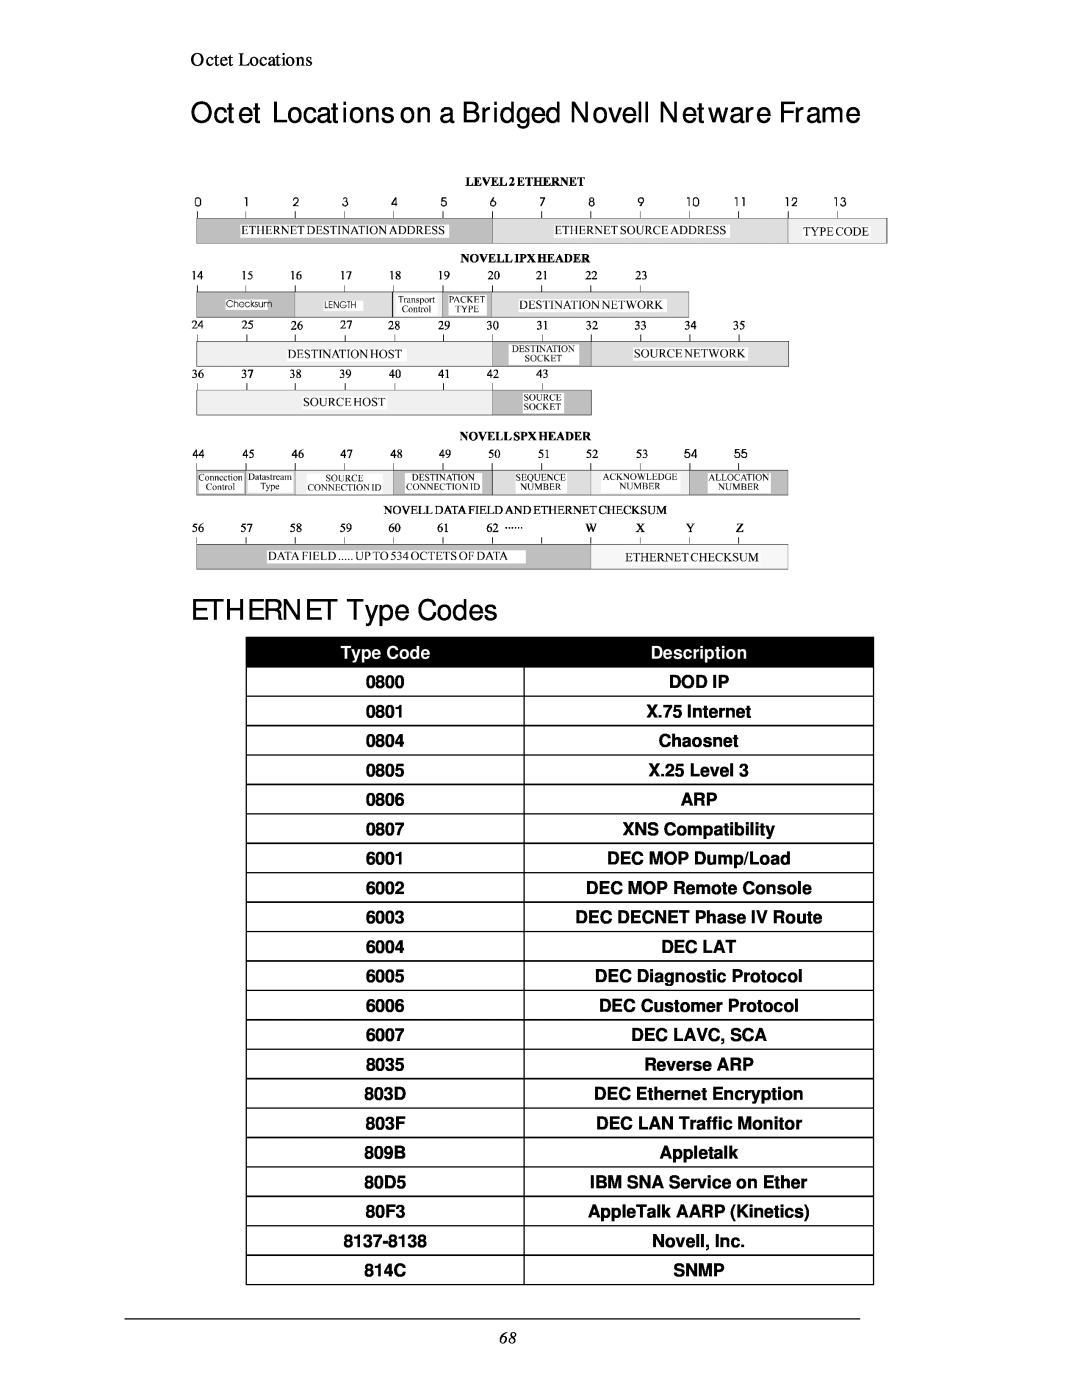 Black Box LR5100A-T, LR5200A-R2 manual Octet Locations on a Bridged Novell Netware Frame ETHERNET Type Codes 